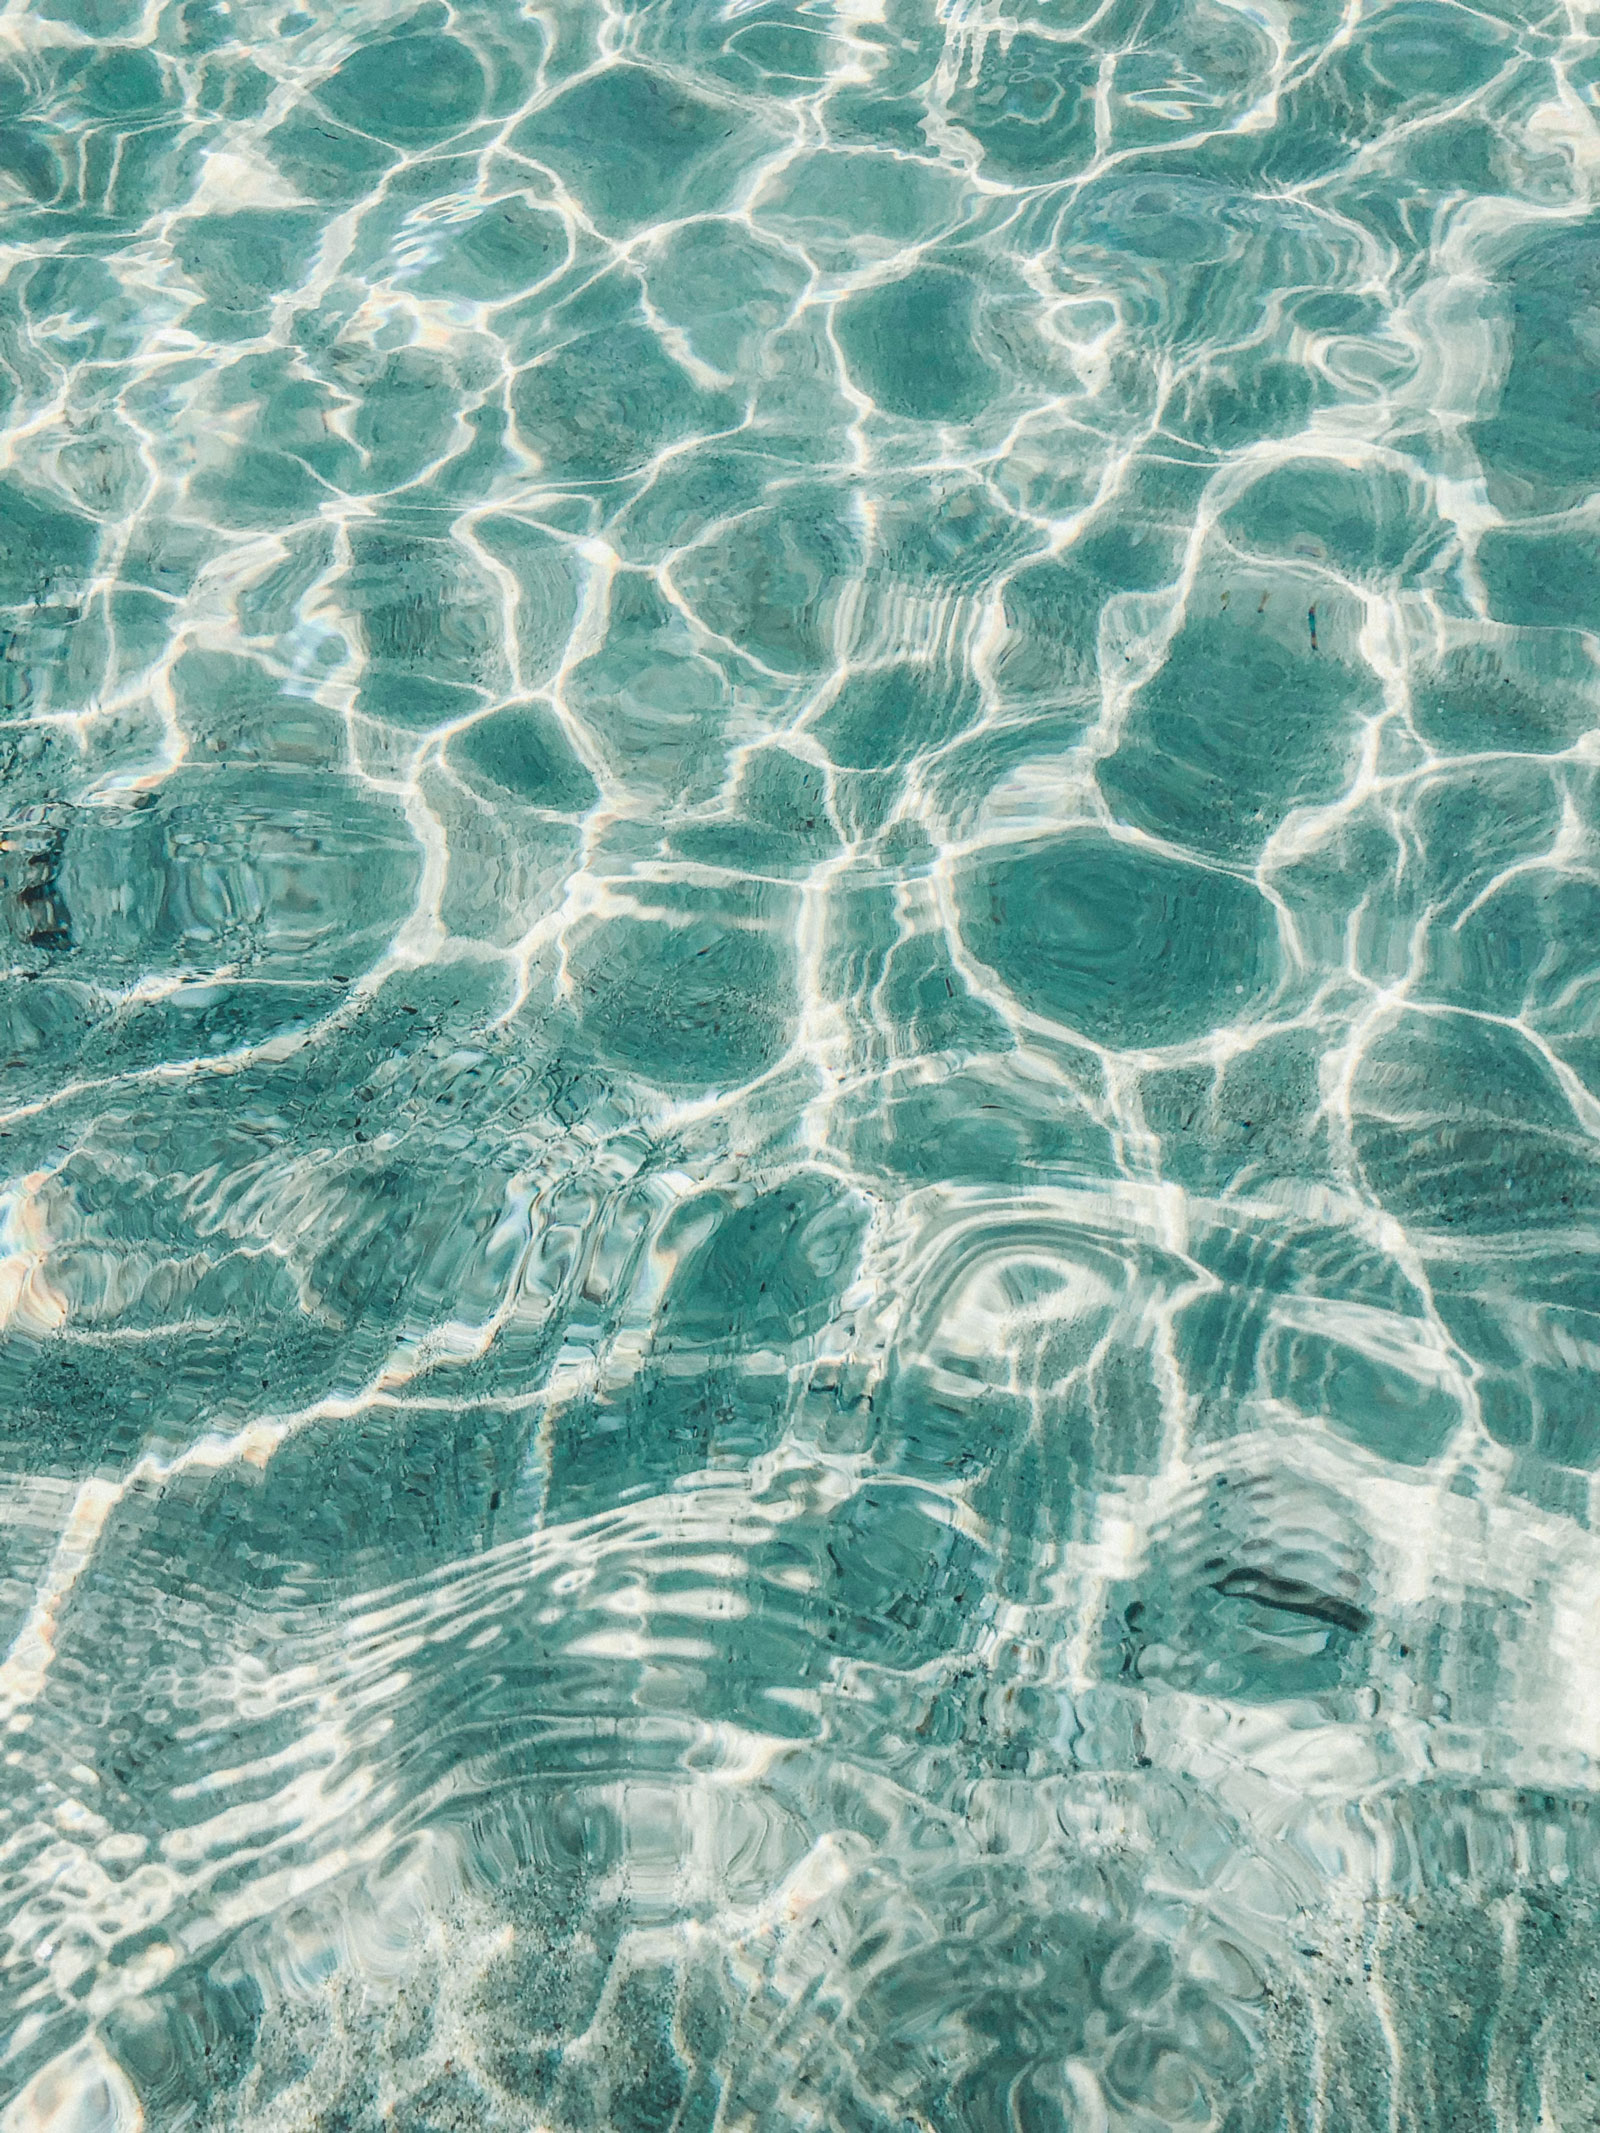 Ocean Water Texture Reflection Travel Photography / Dubai Travel Tips